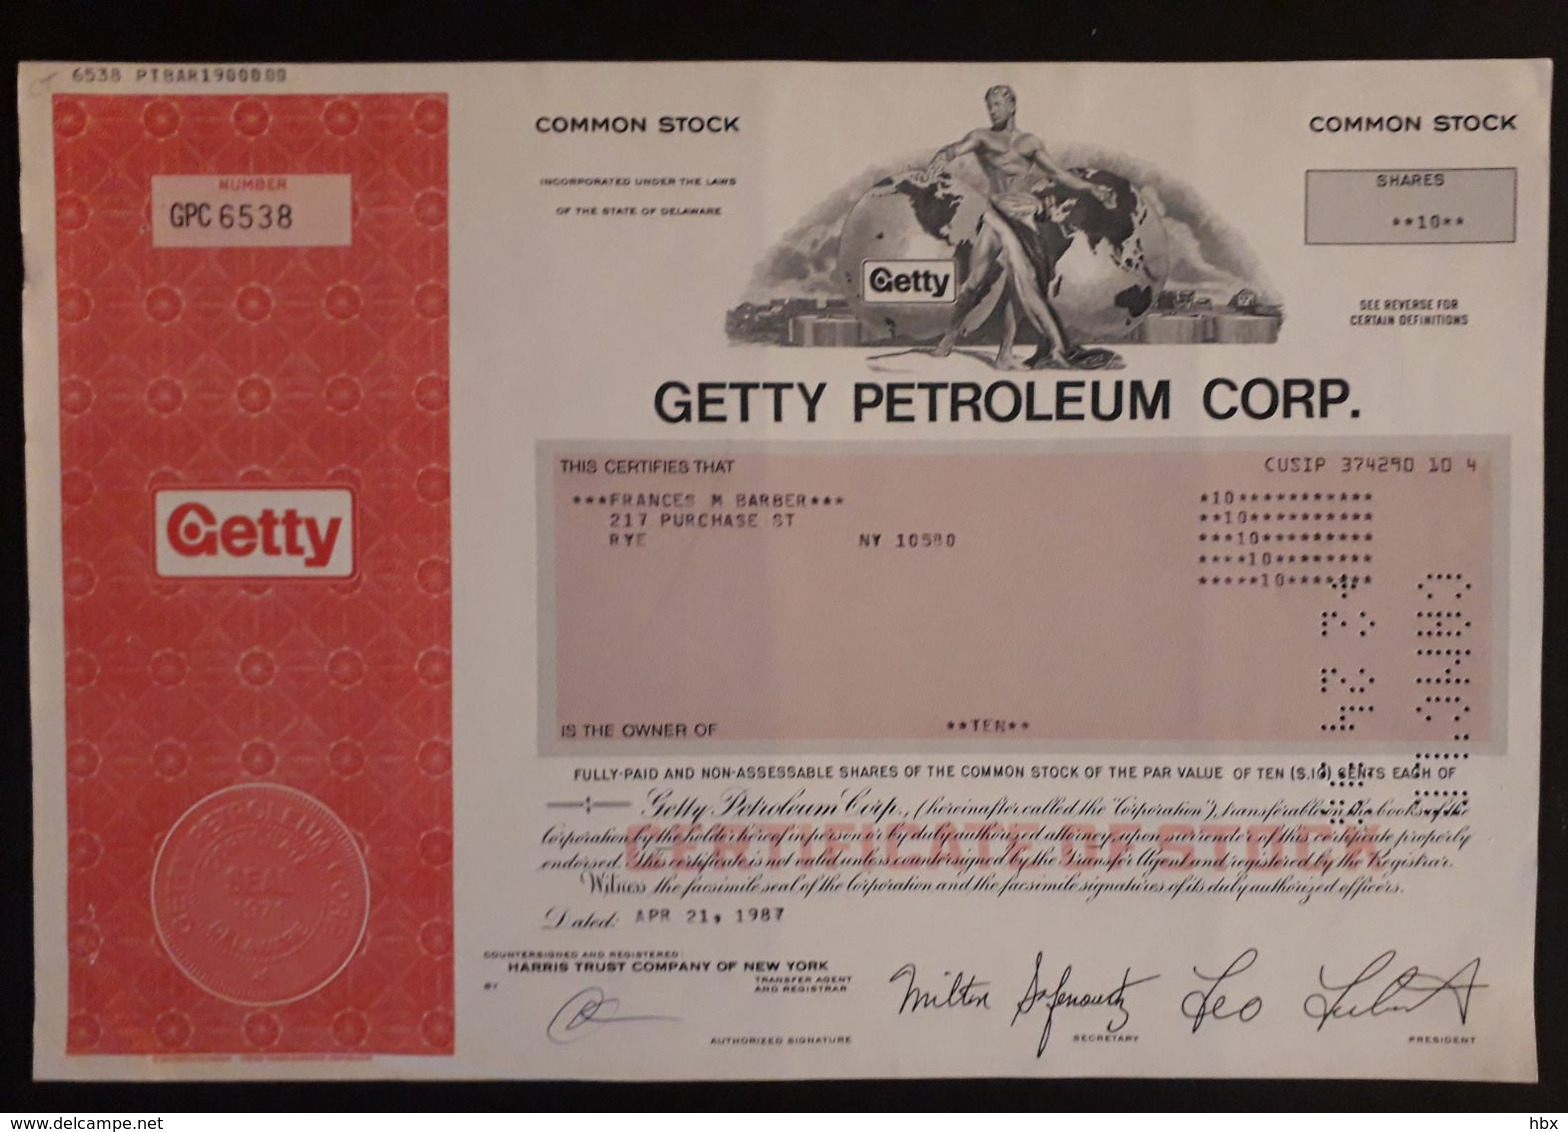 Getty Petroleum Corporation - Oil